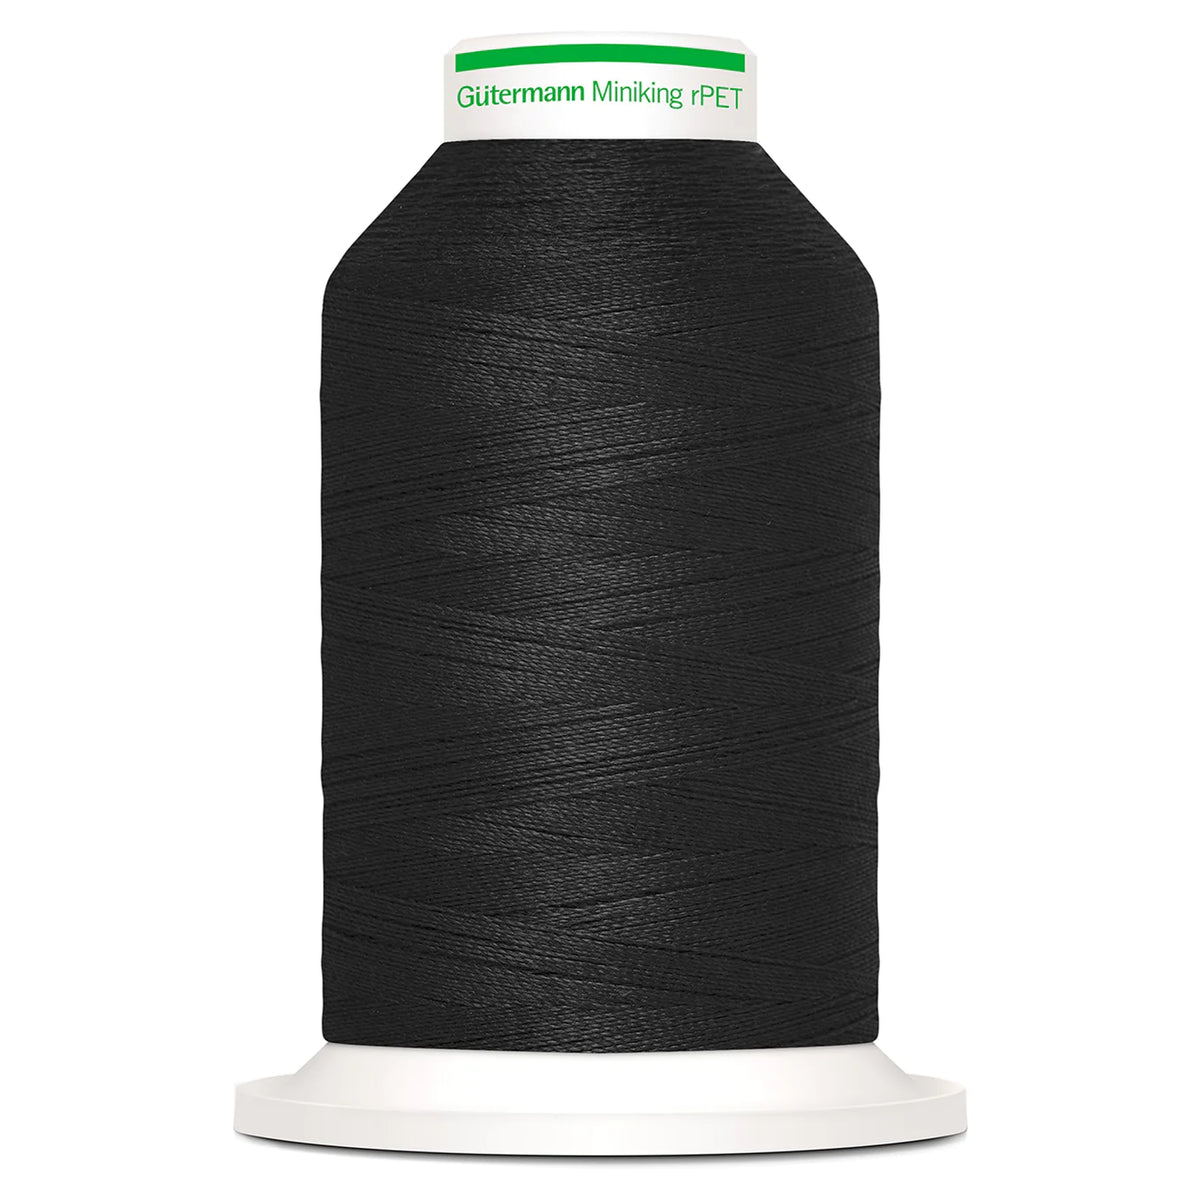 Gütermann rPET Miniking Thread - 1000m Recycled Polyester